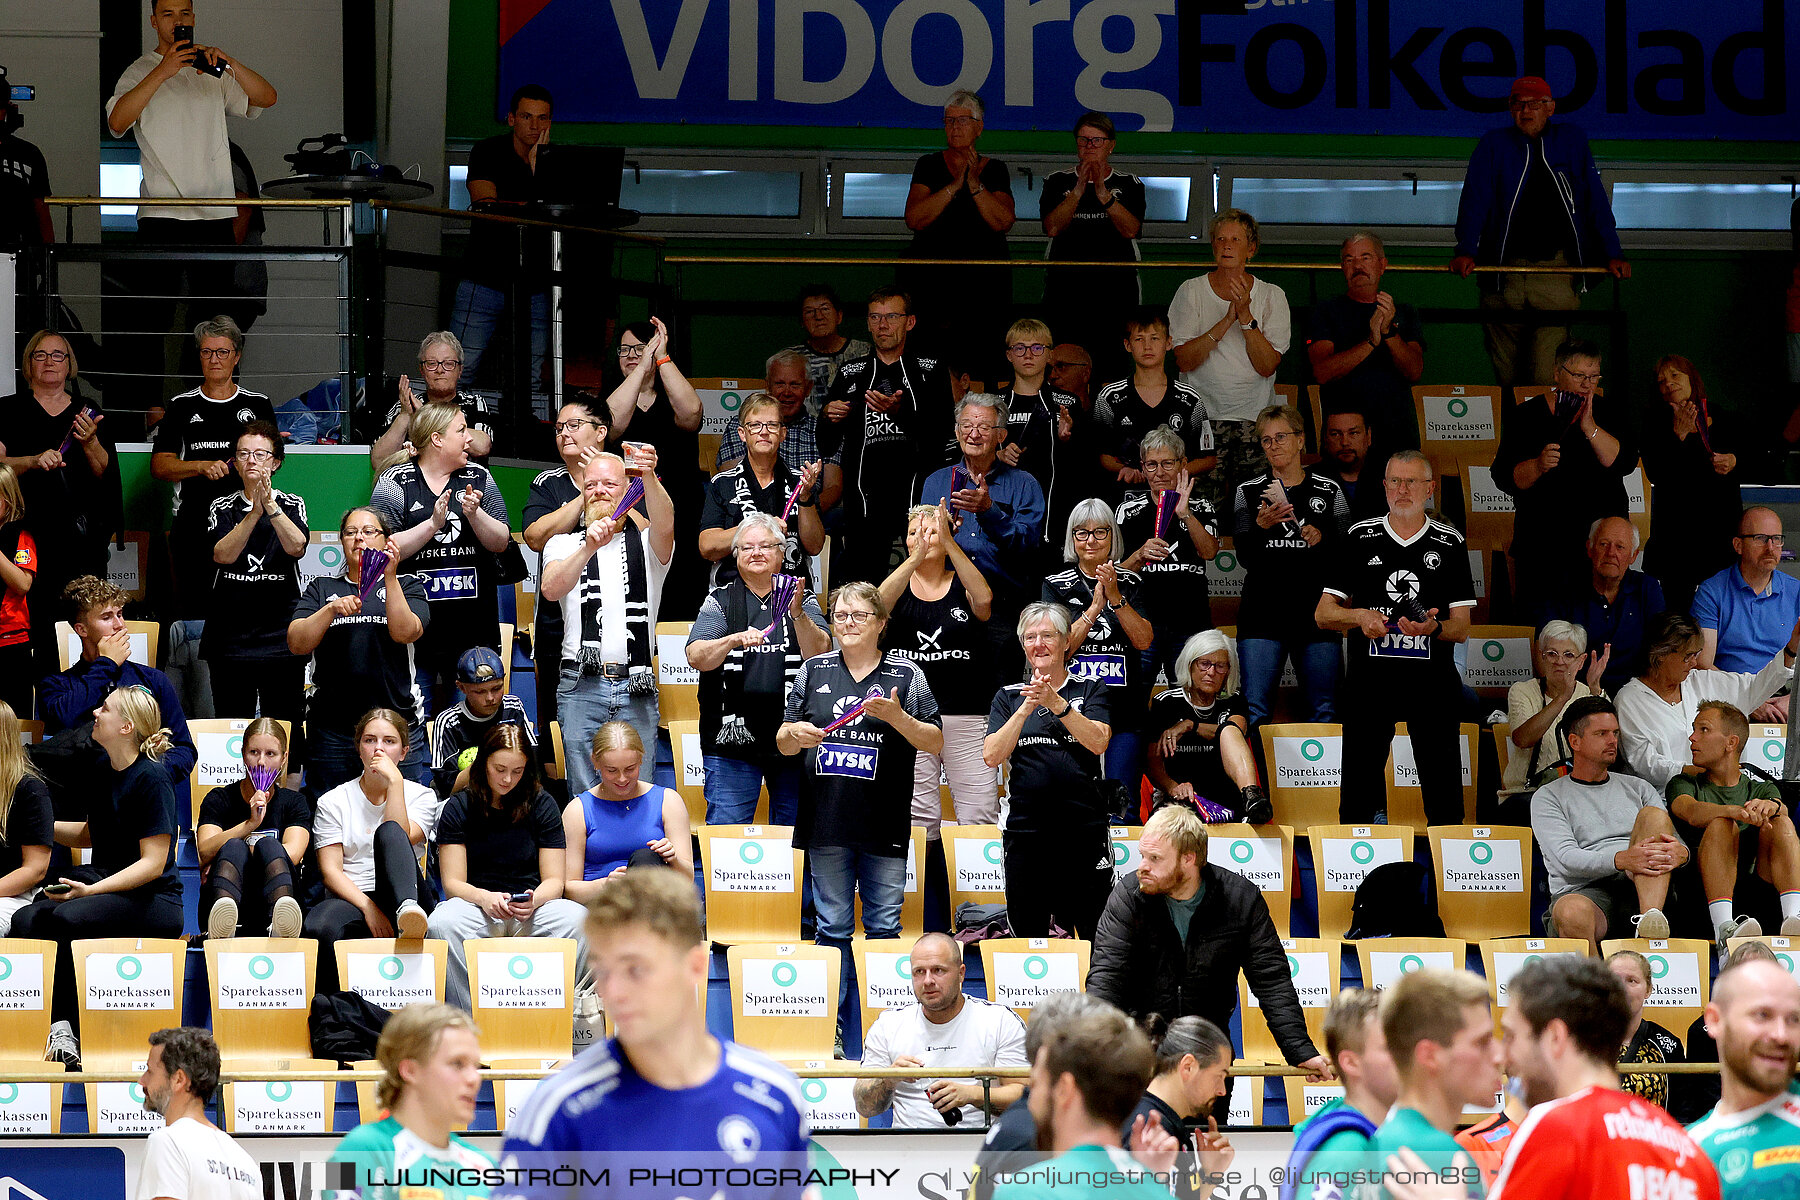 Generation Handball SC DHfK Leipzig-Bjerringbro-Silkeborg,herr,Biocirc Arena,Viborg,Danmark,Handboll,,2023,314139